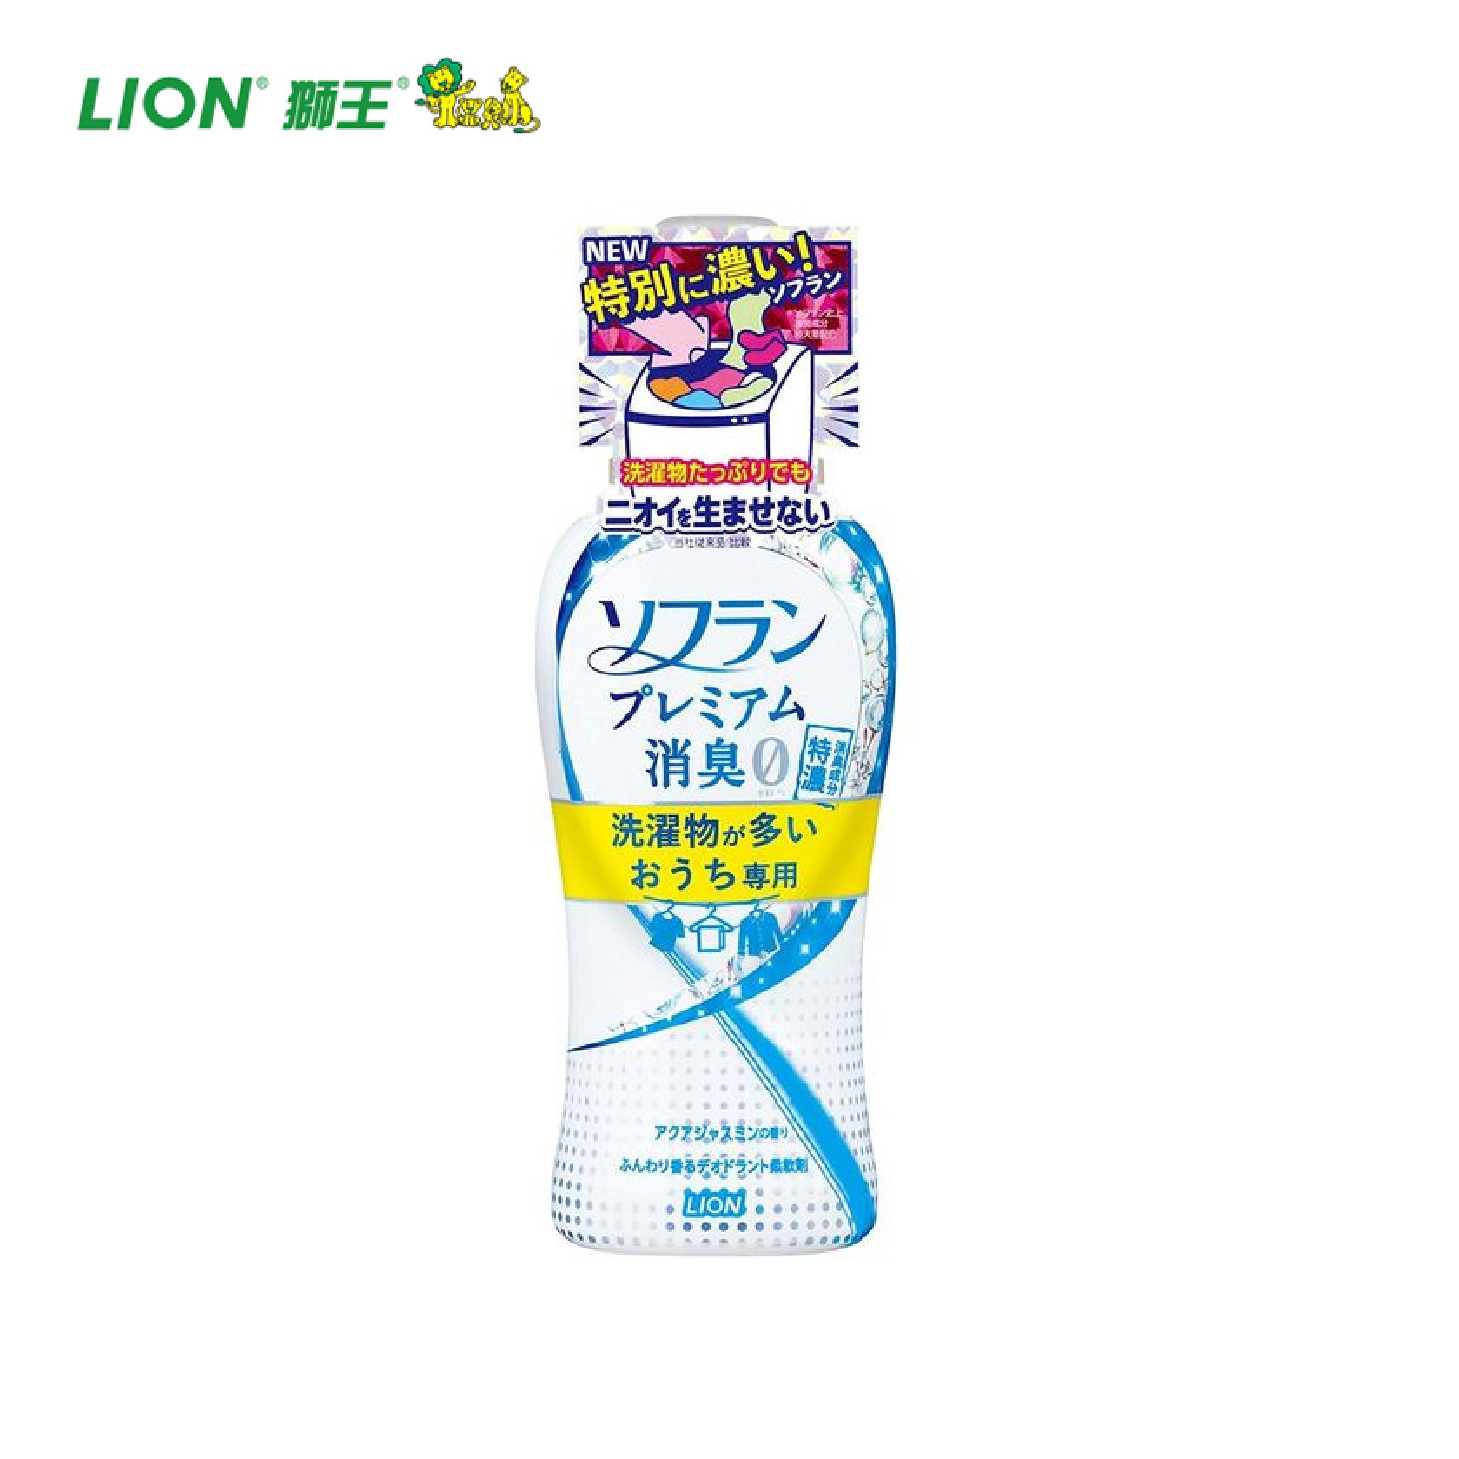 LION狮王 | 柔顺剂 | 清爽水果香 | 550ml